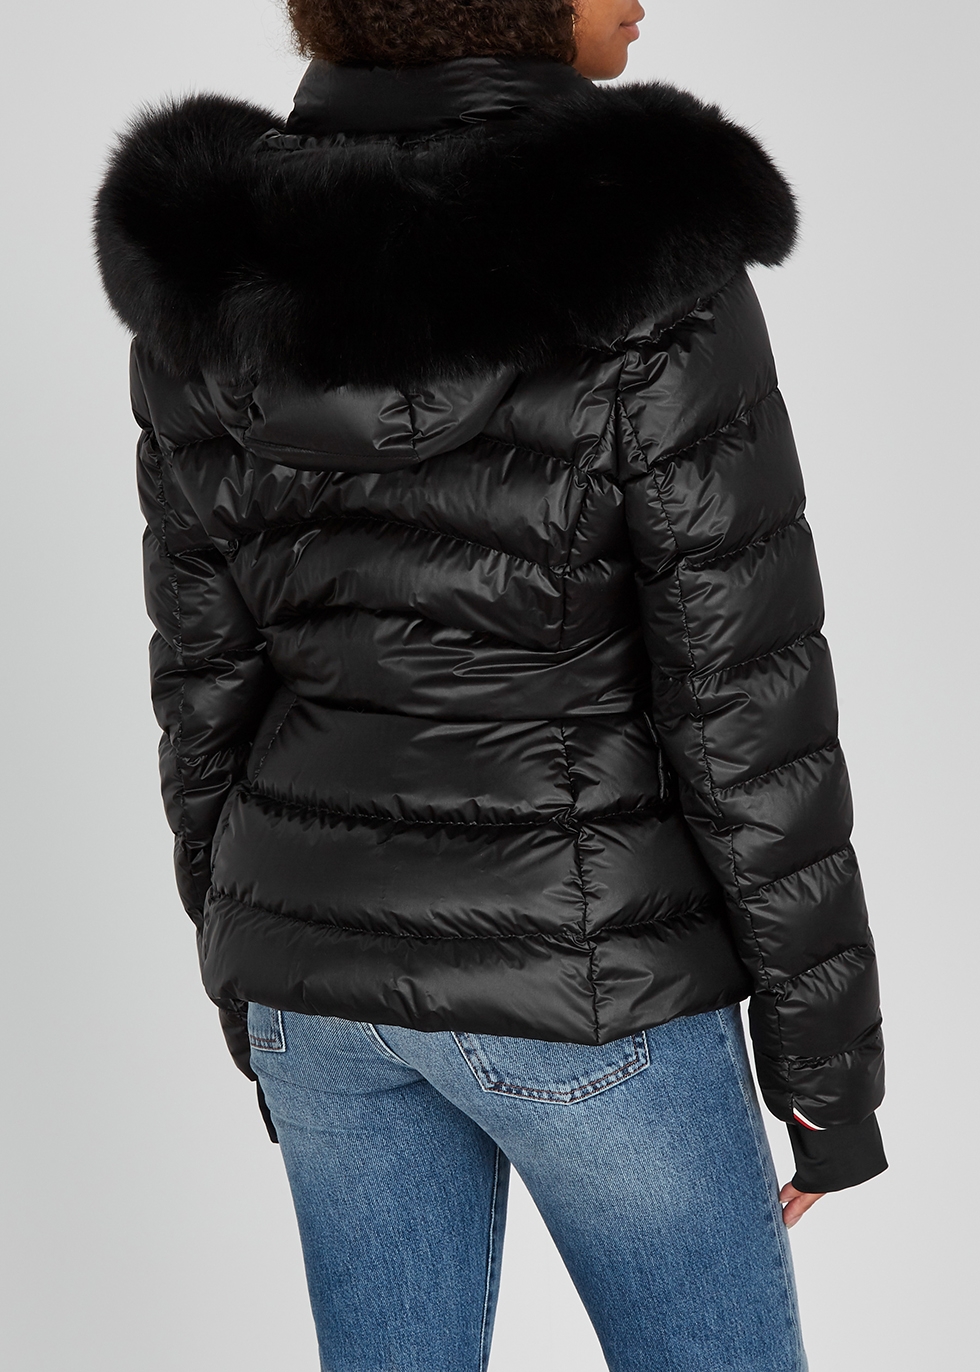 black fur moncler coat